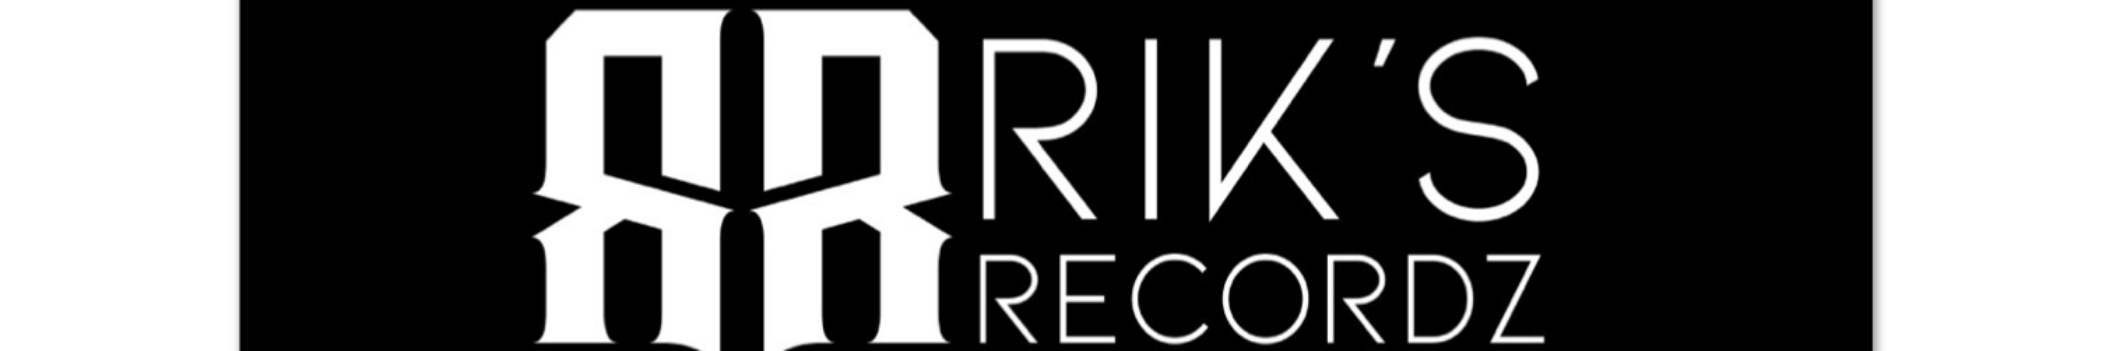 Rik's recordz